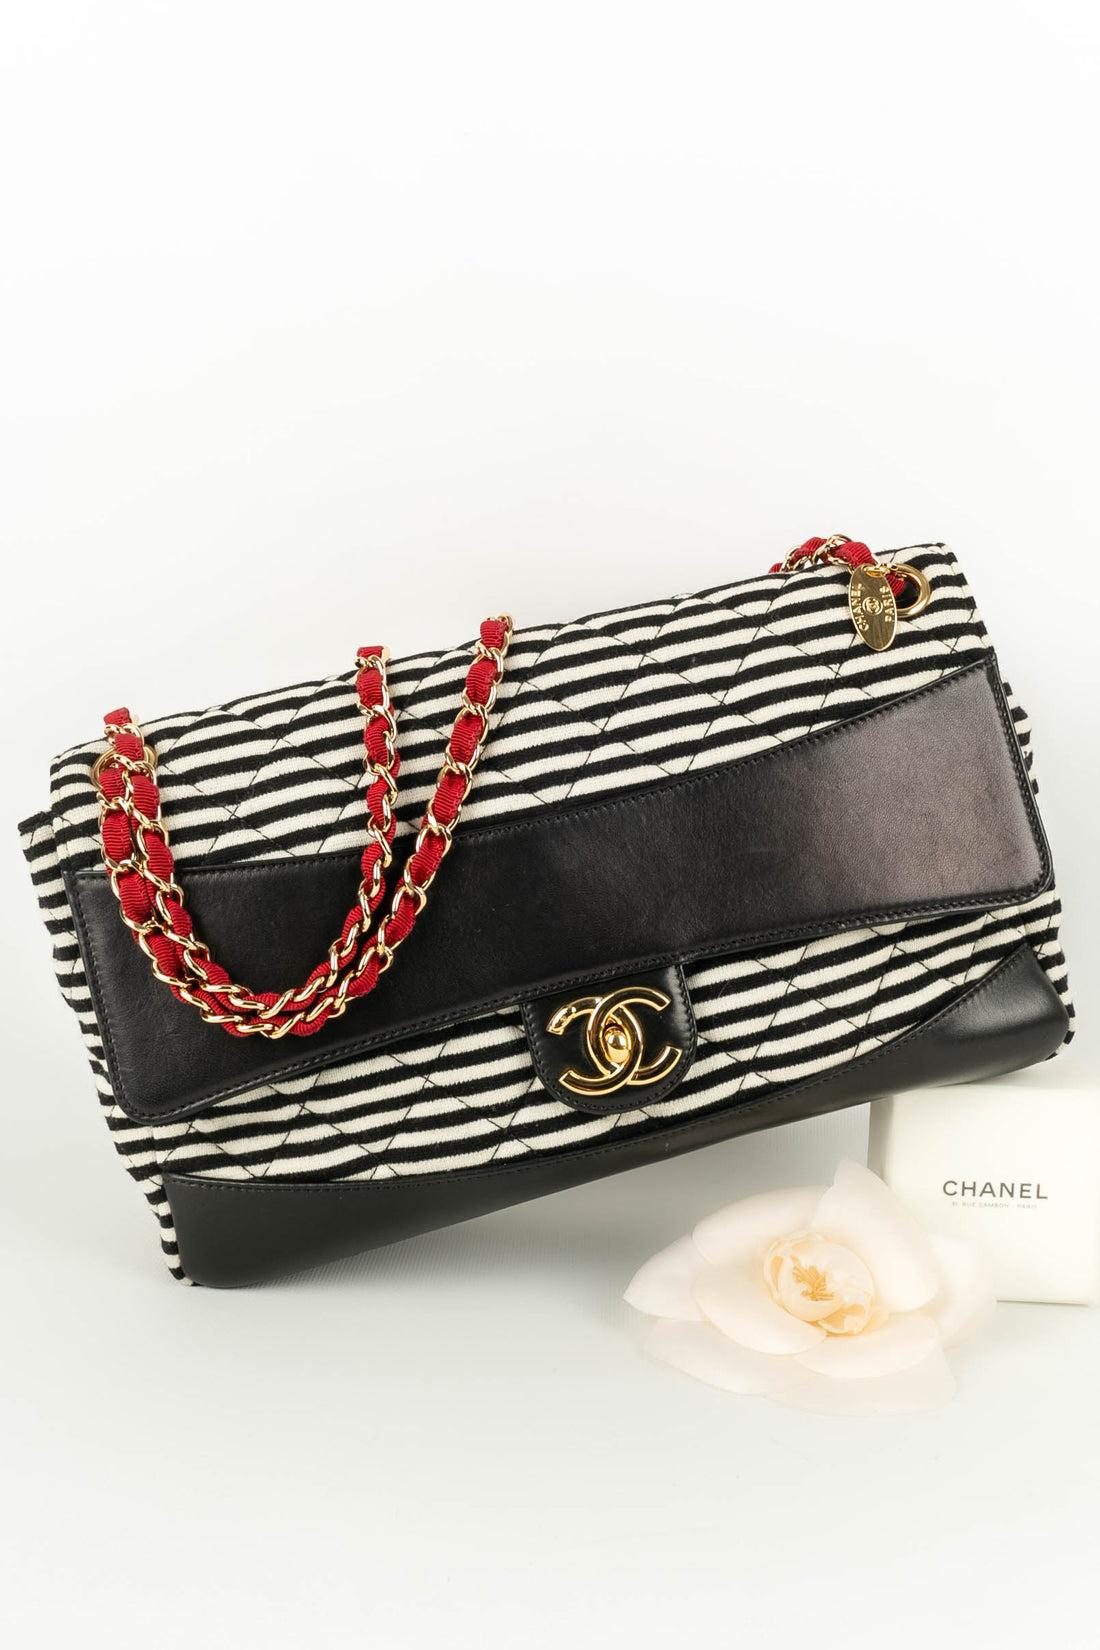 Chanel Black and White Stripes Bag, 2014 11